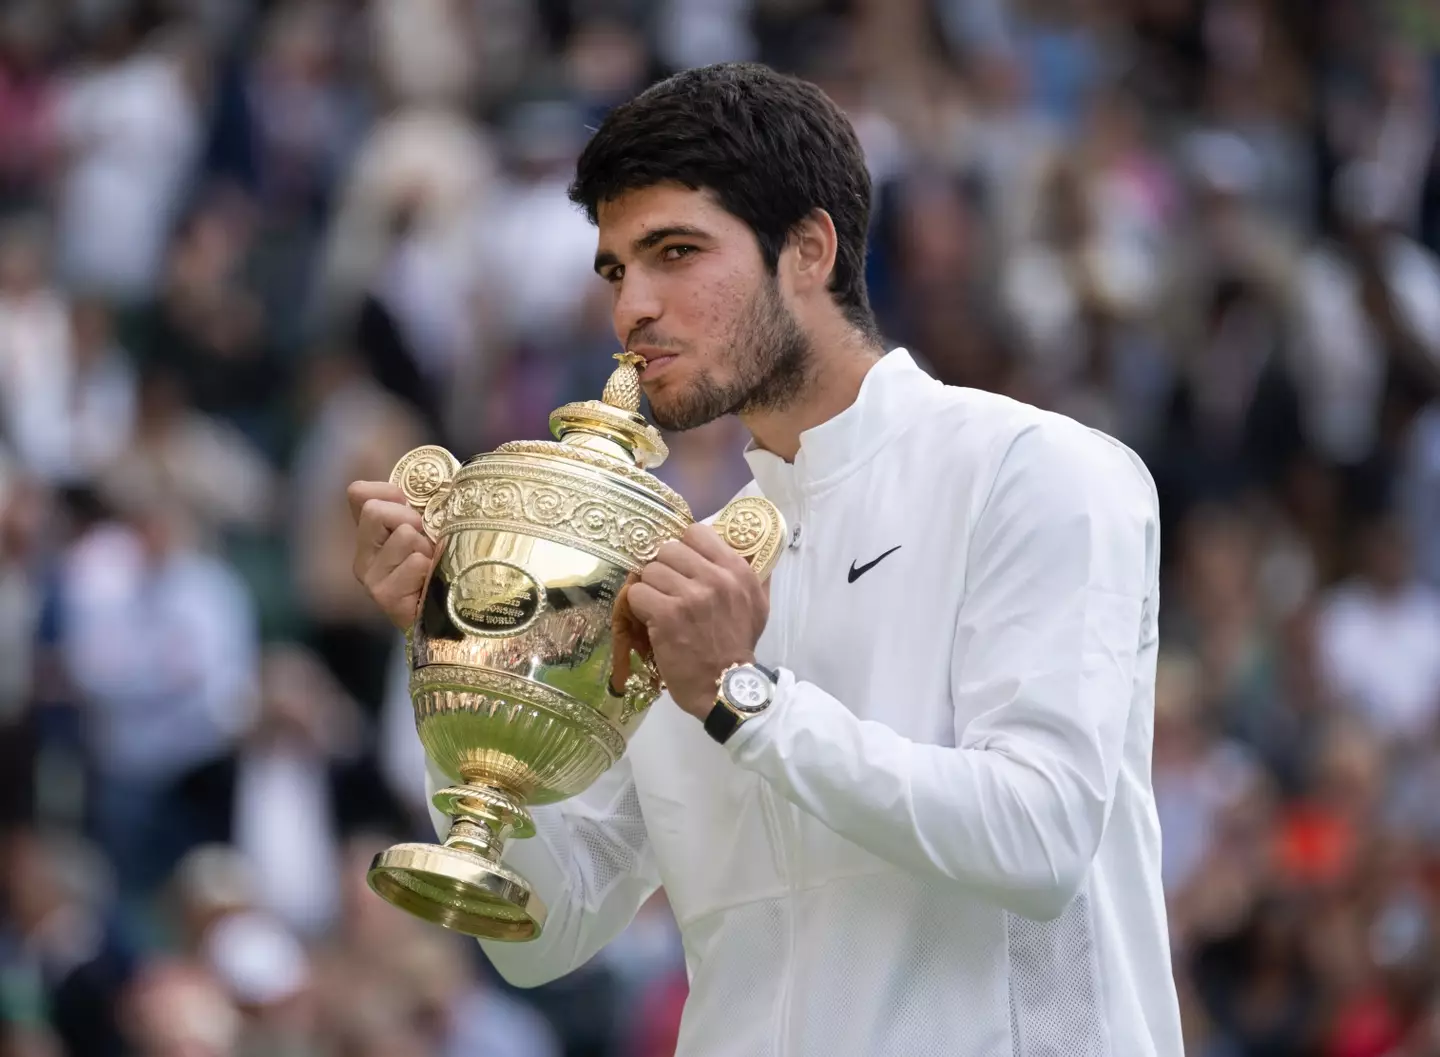 Alcaraz achieved a lifelong ambition of winning Wimbledon.